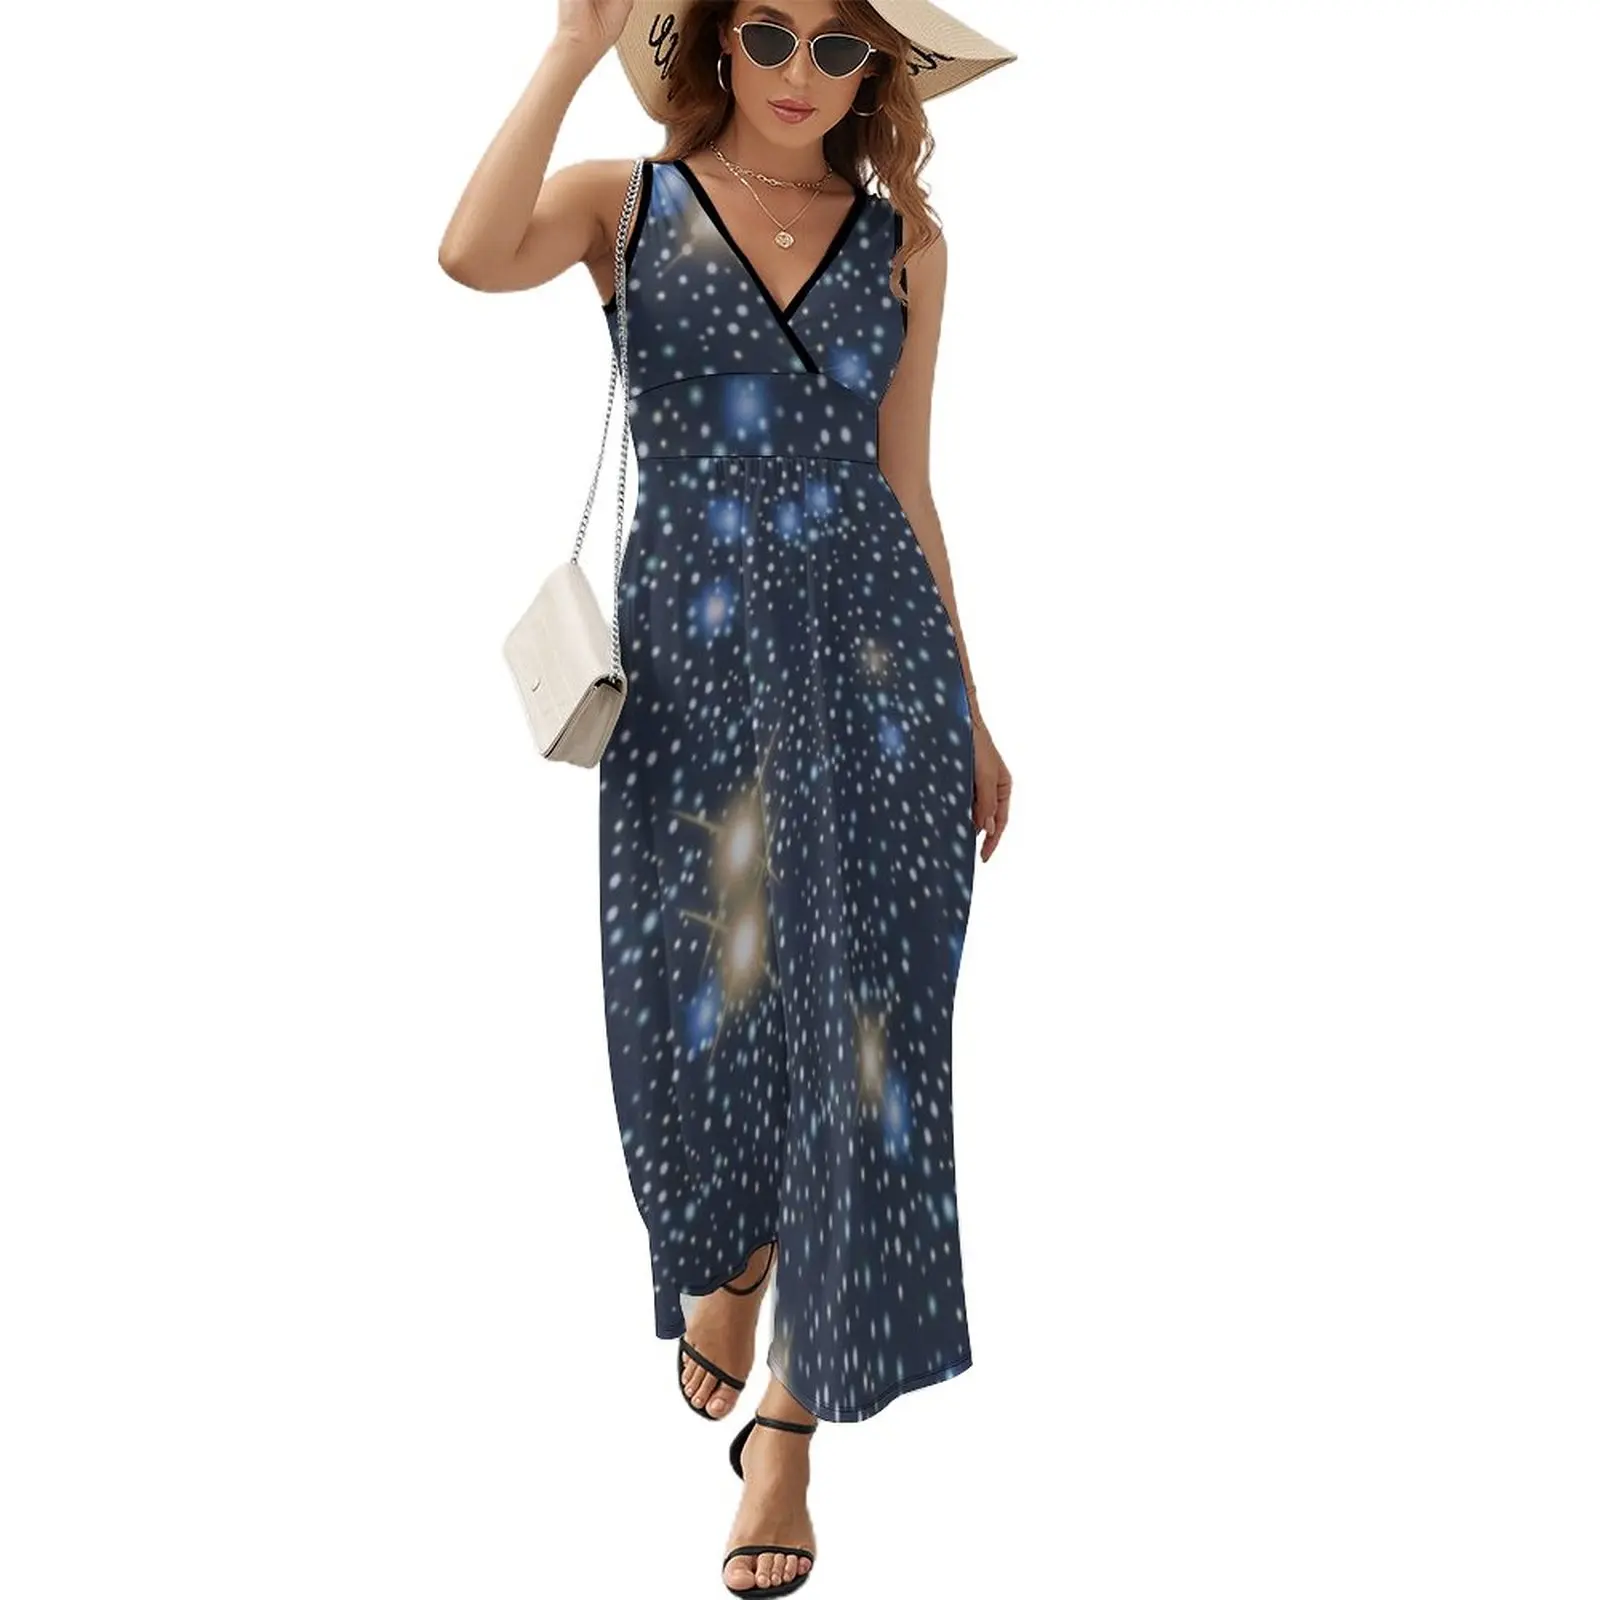 

Dark Blue Galaxy Dress Vivid Sparkle Stars Night Club Maxi Dress V Neck Design Boho Beach Long Dresses Casual Big Size Clothing